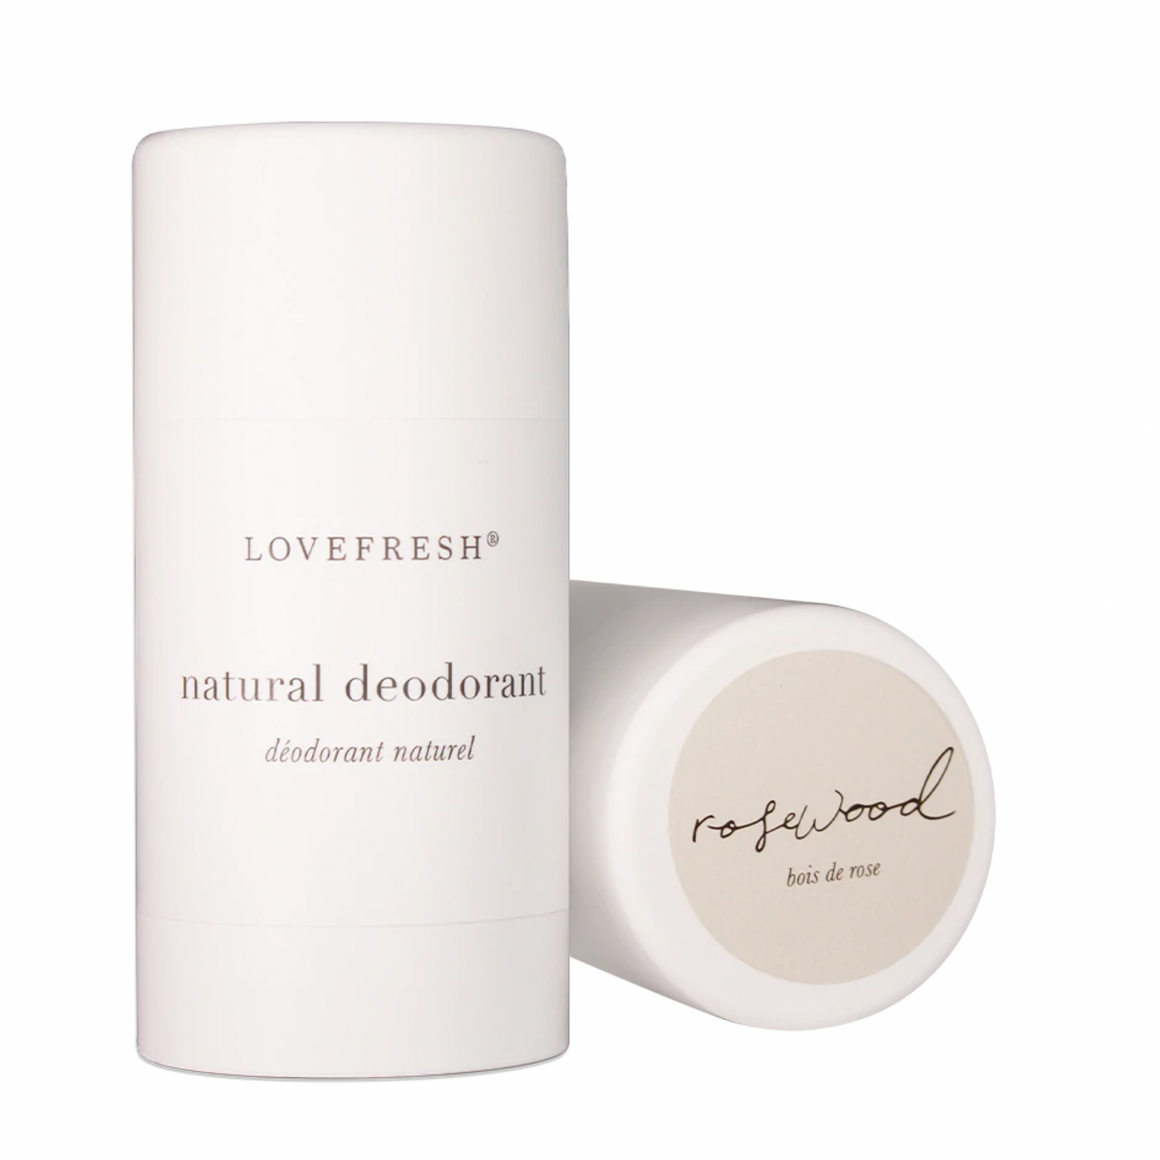 Lovefresh Deodorant